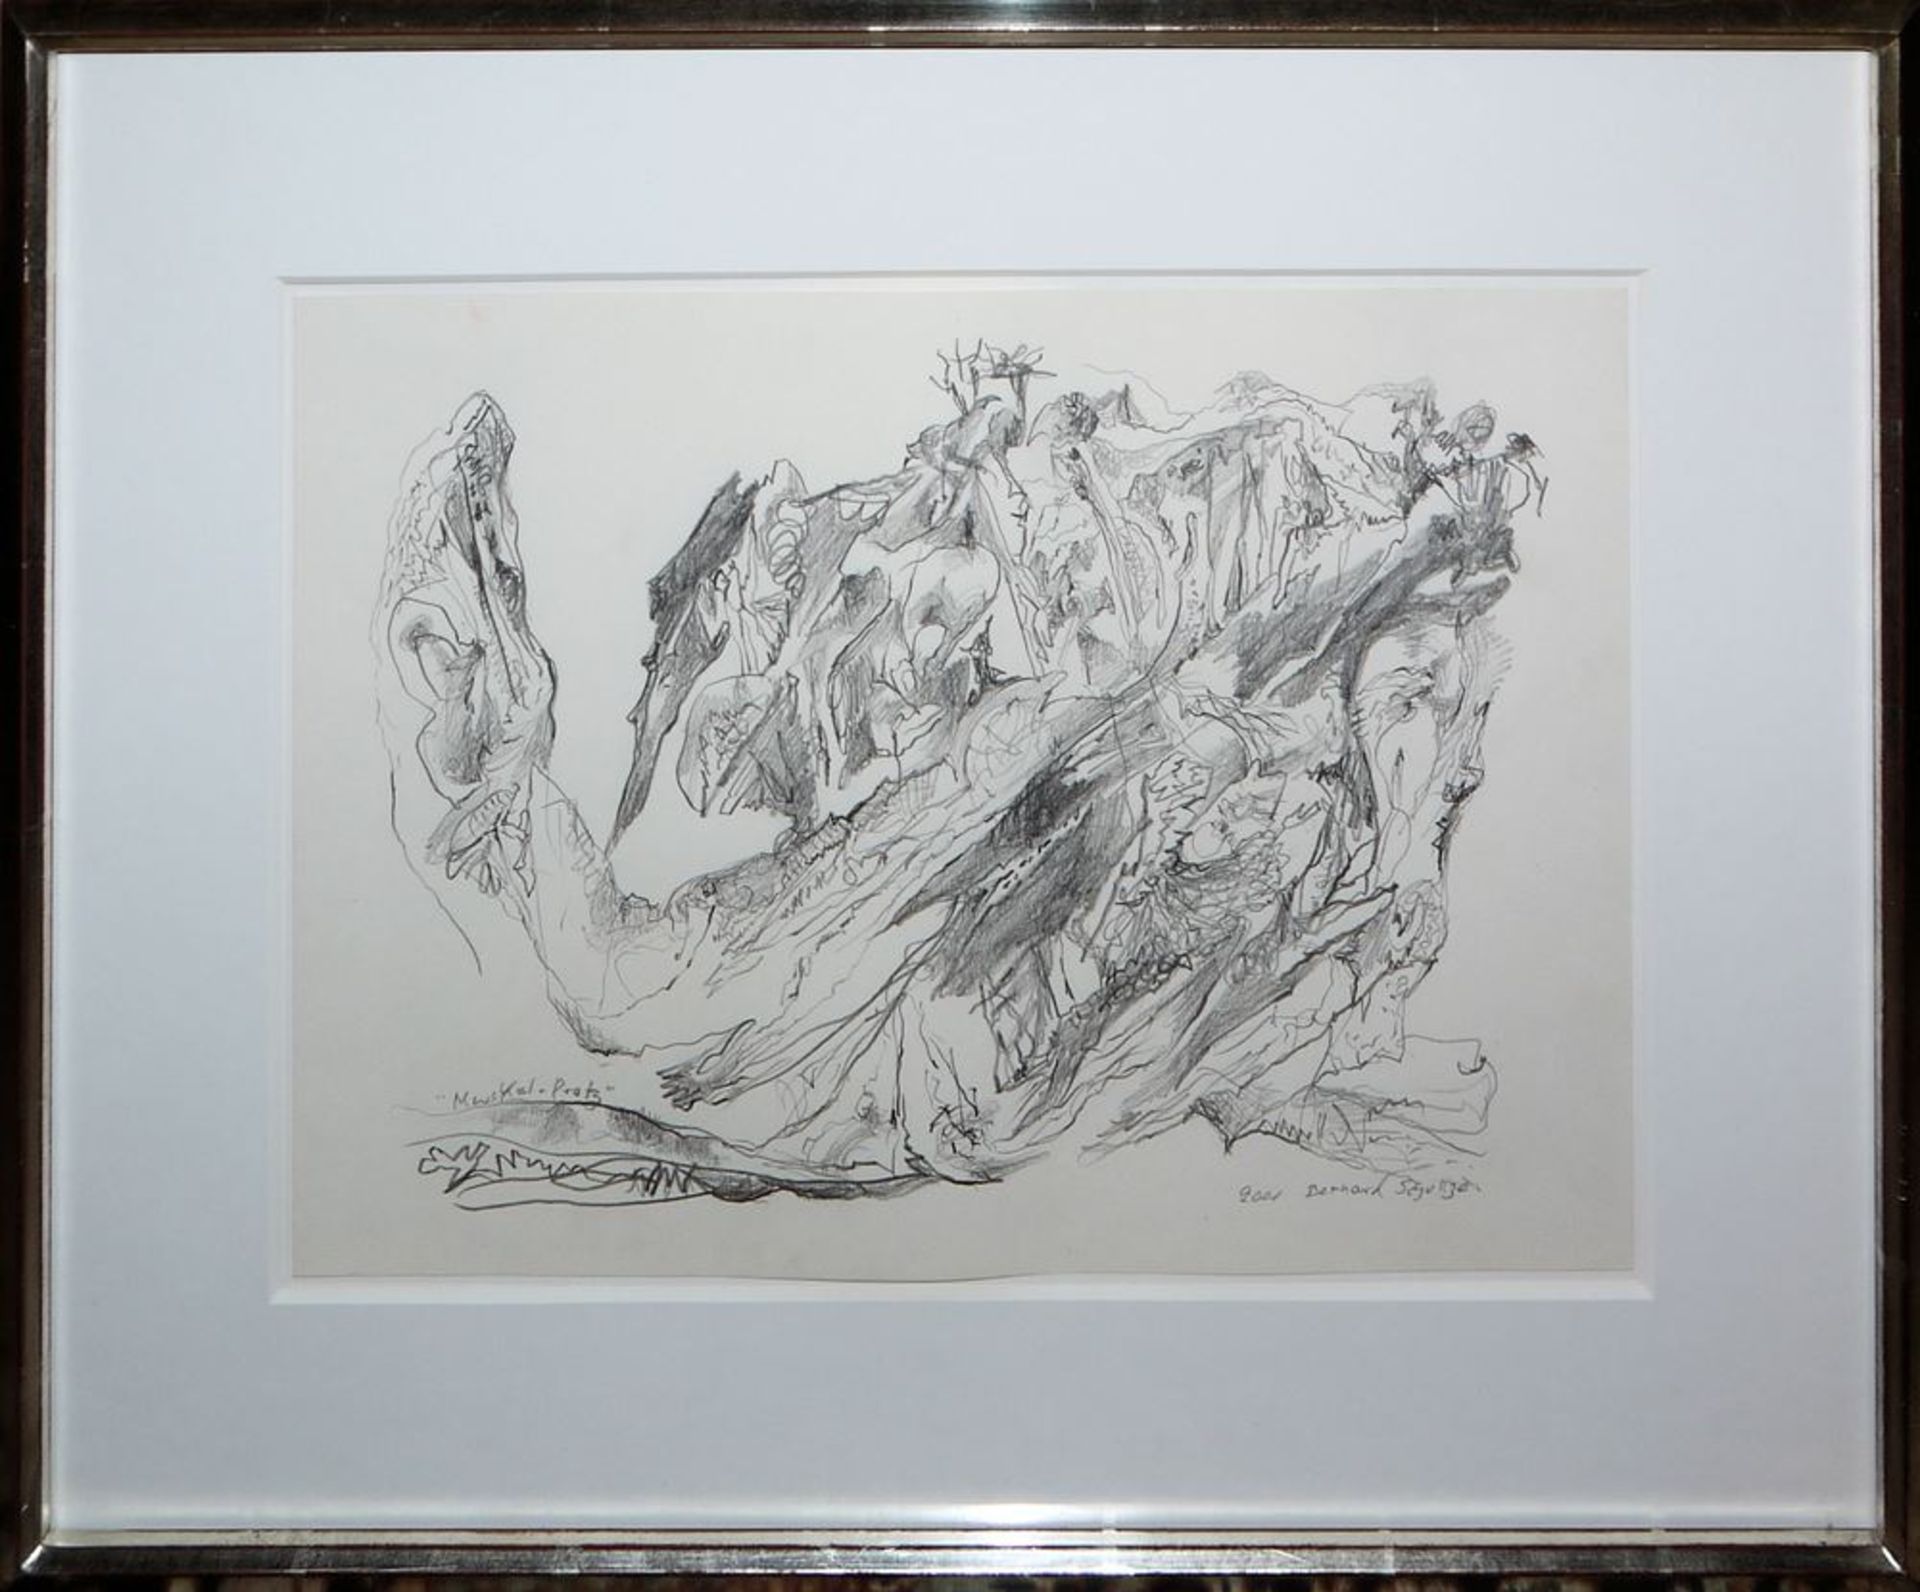 Bernard Schultze, "Muskelprotz", drawing in mint gallery frame